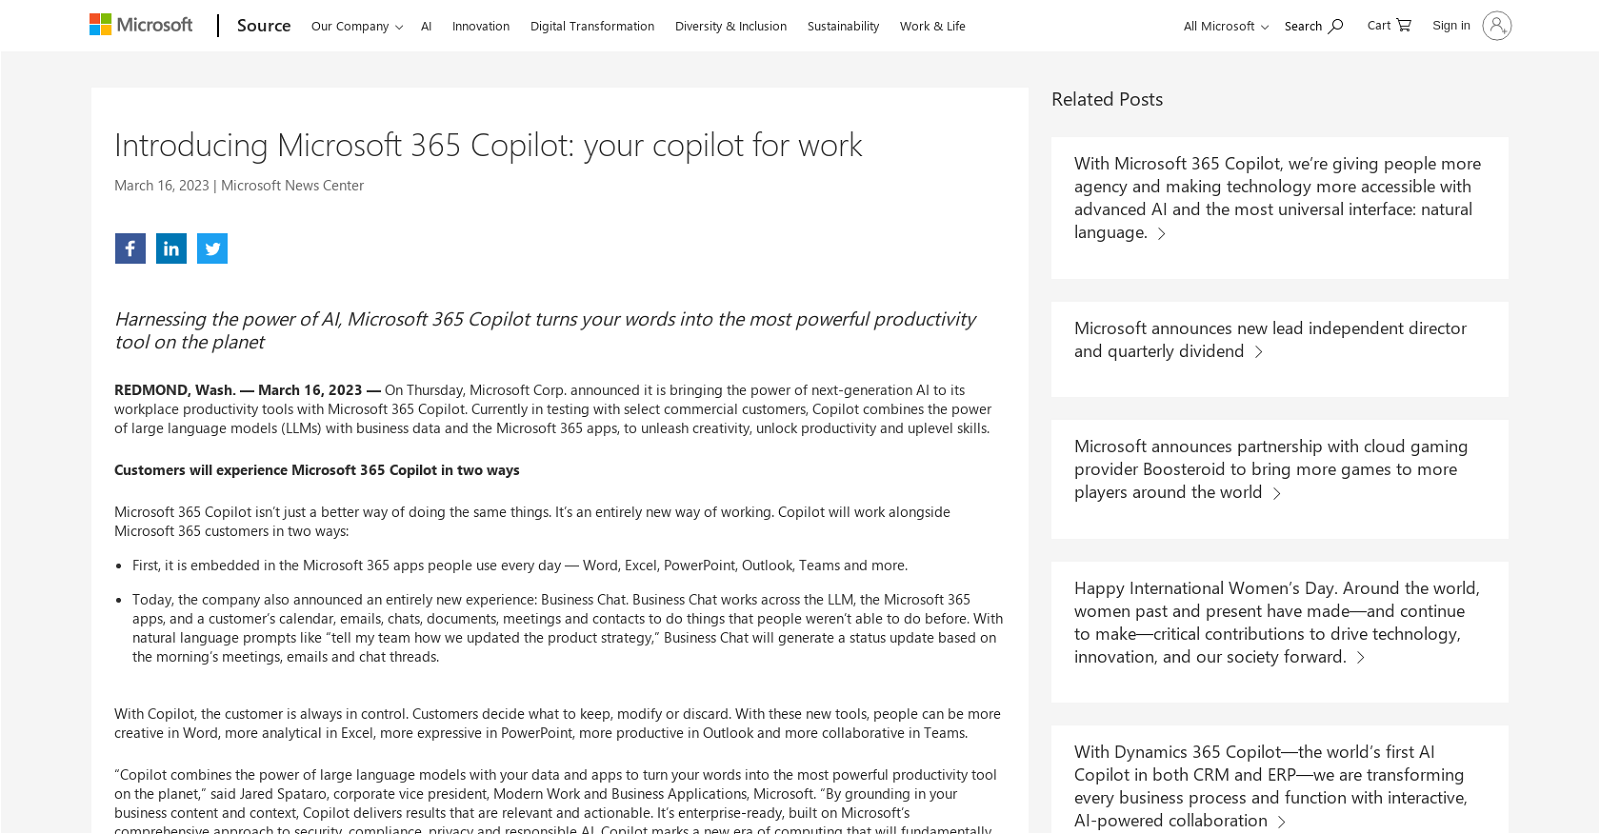 Microsoft 365 Co-pilot